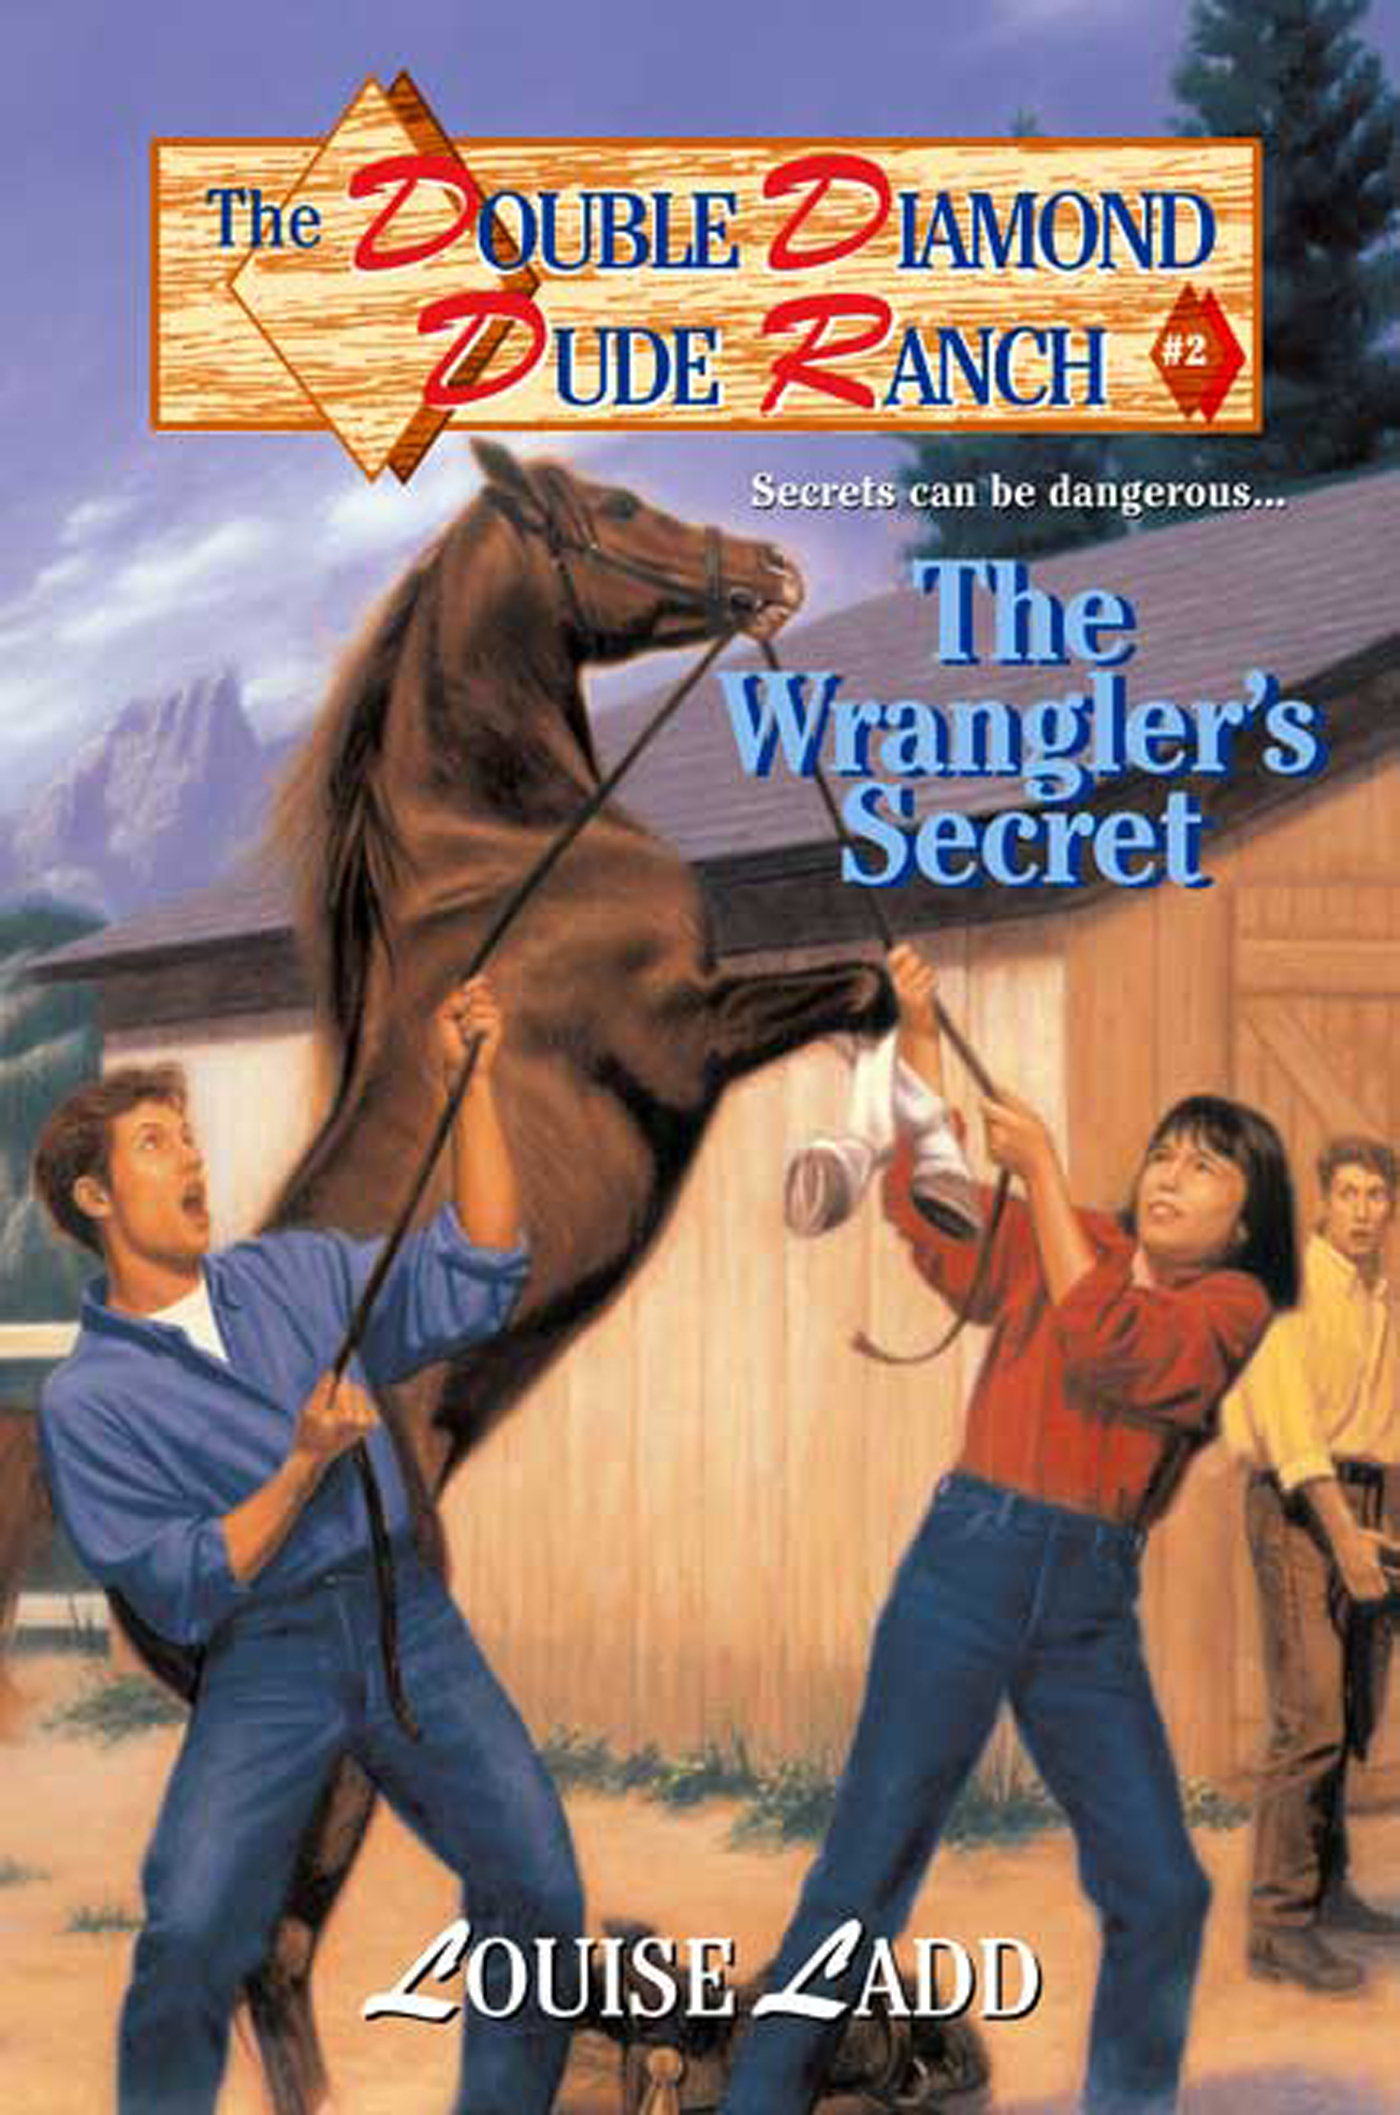 Double Diamond Dude Ranch #2 - The Wrangler's Secret by Louise Ladd